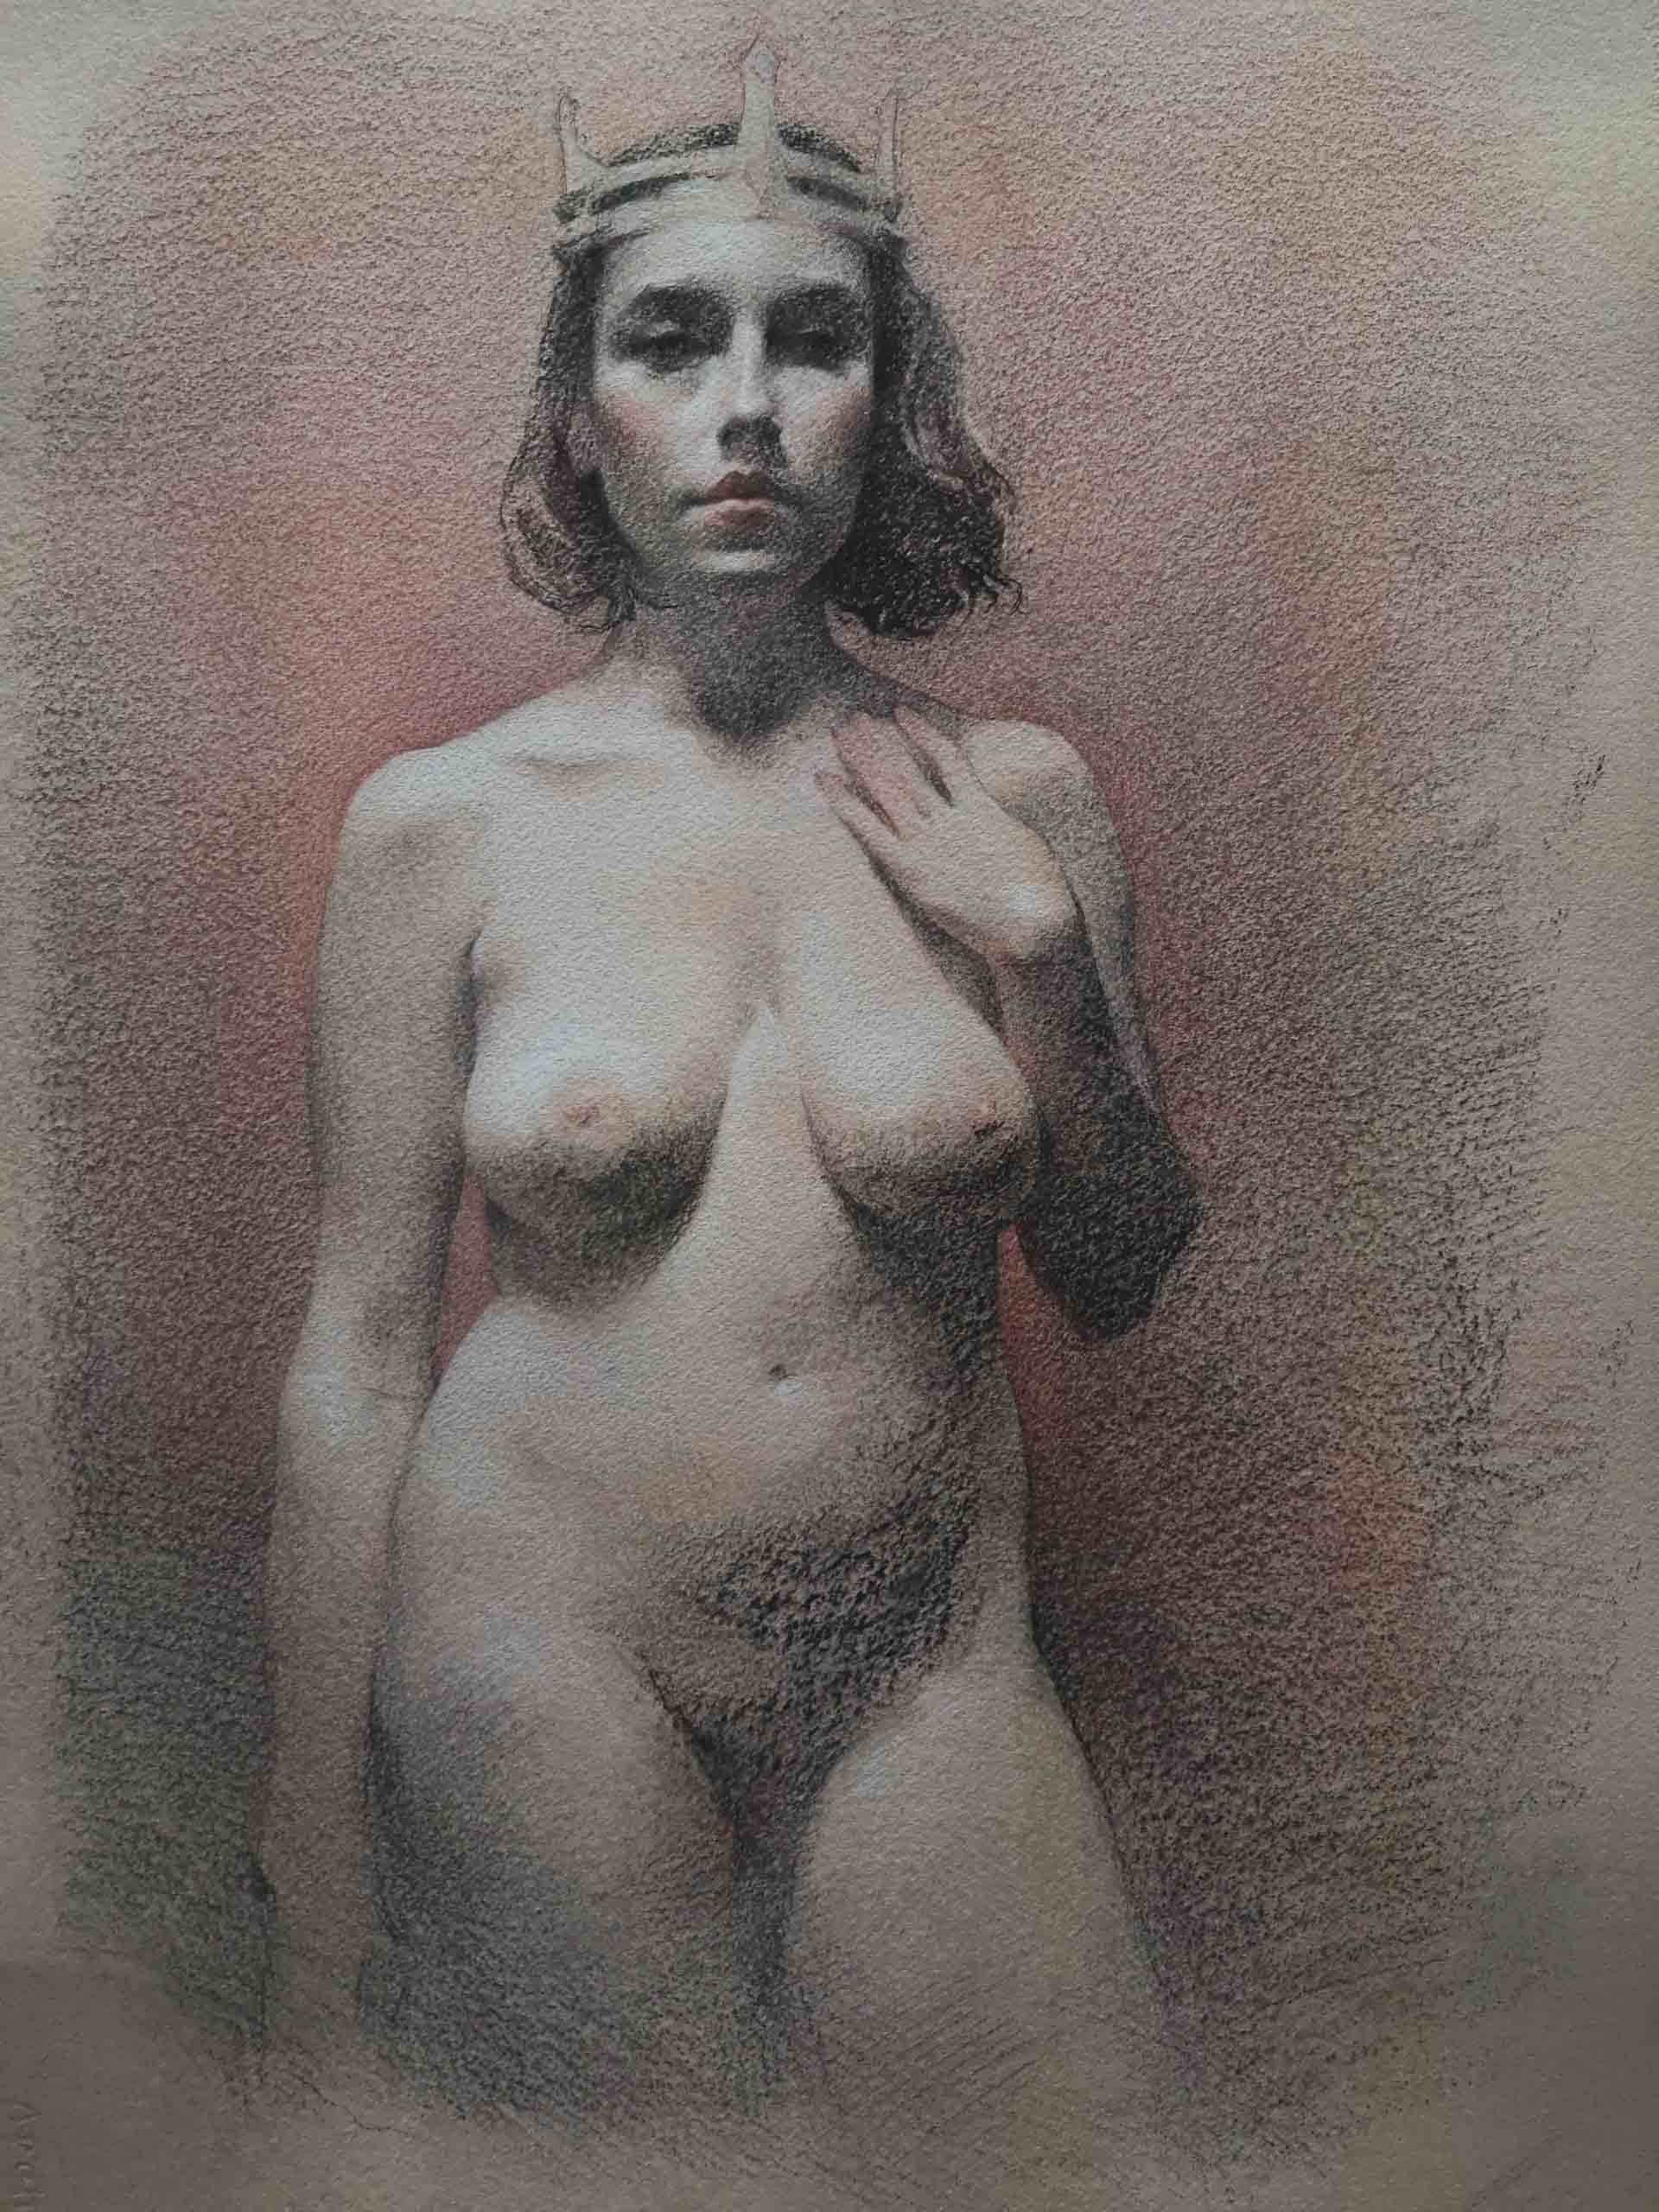 Dasha Belokrylova, Margarita at the Ball, Oil on canvas, 50 x 70 cm, 2021